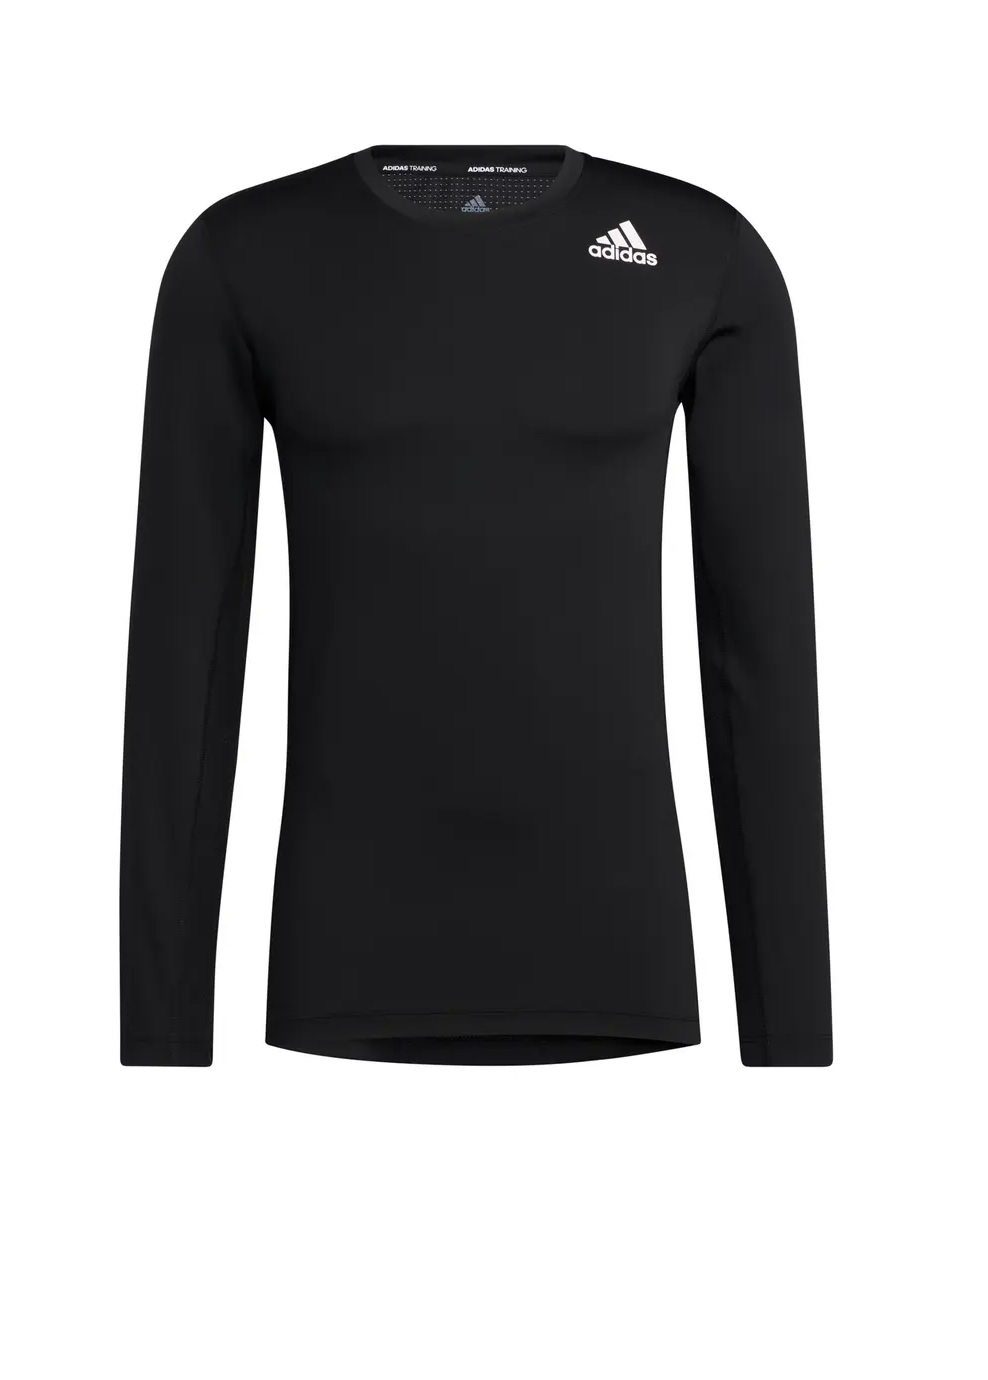 Sale on Adidas Techfit Long Sleeve Training T-Shirt